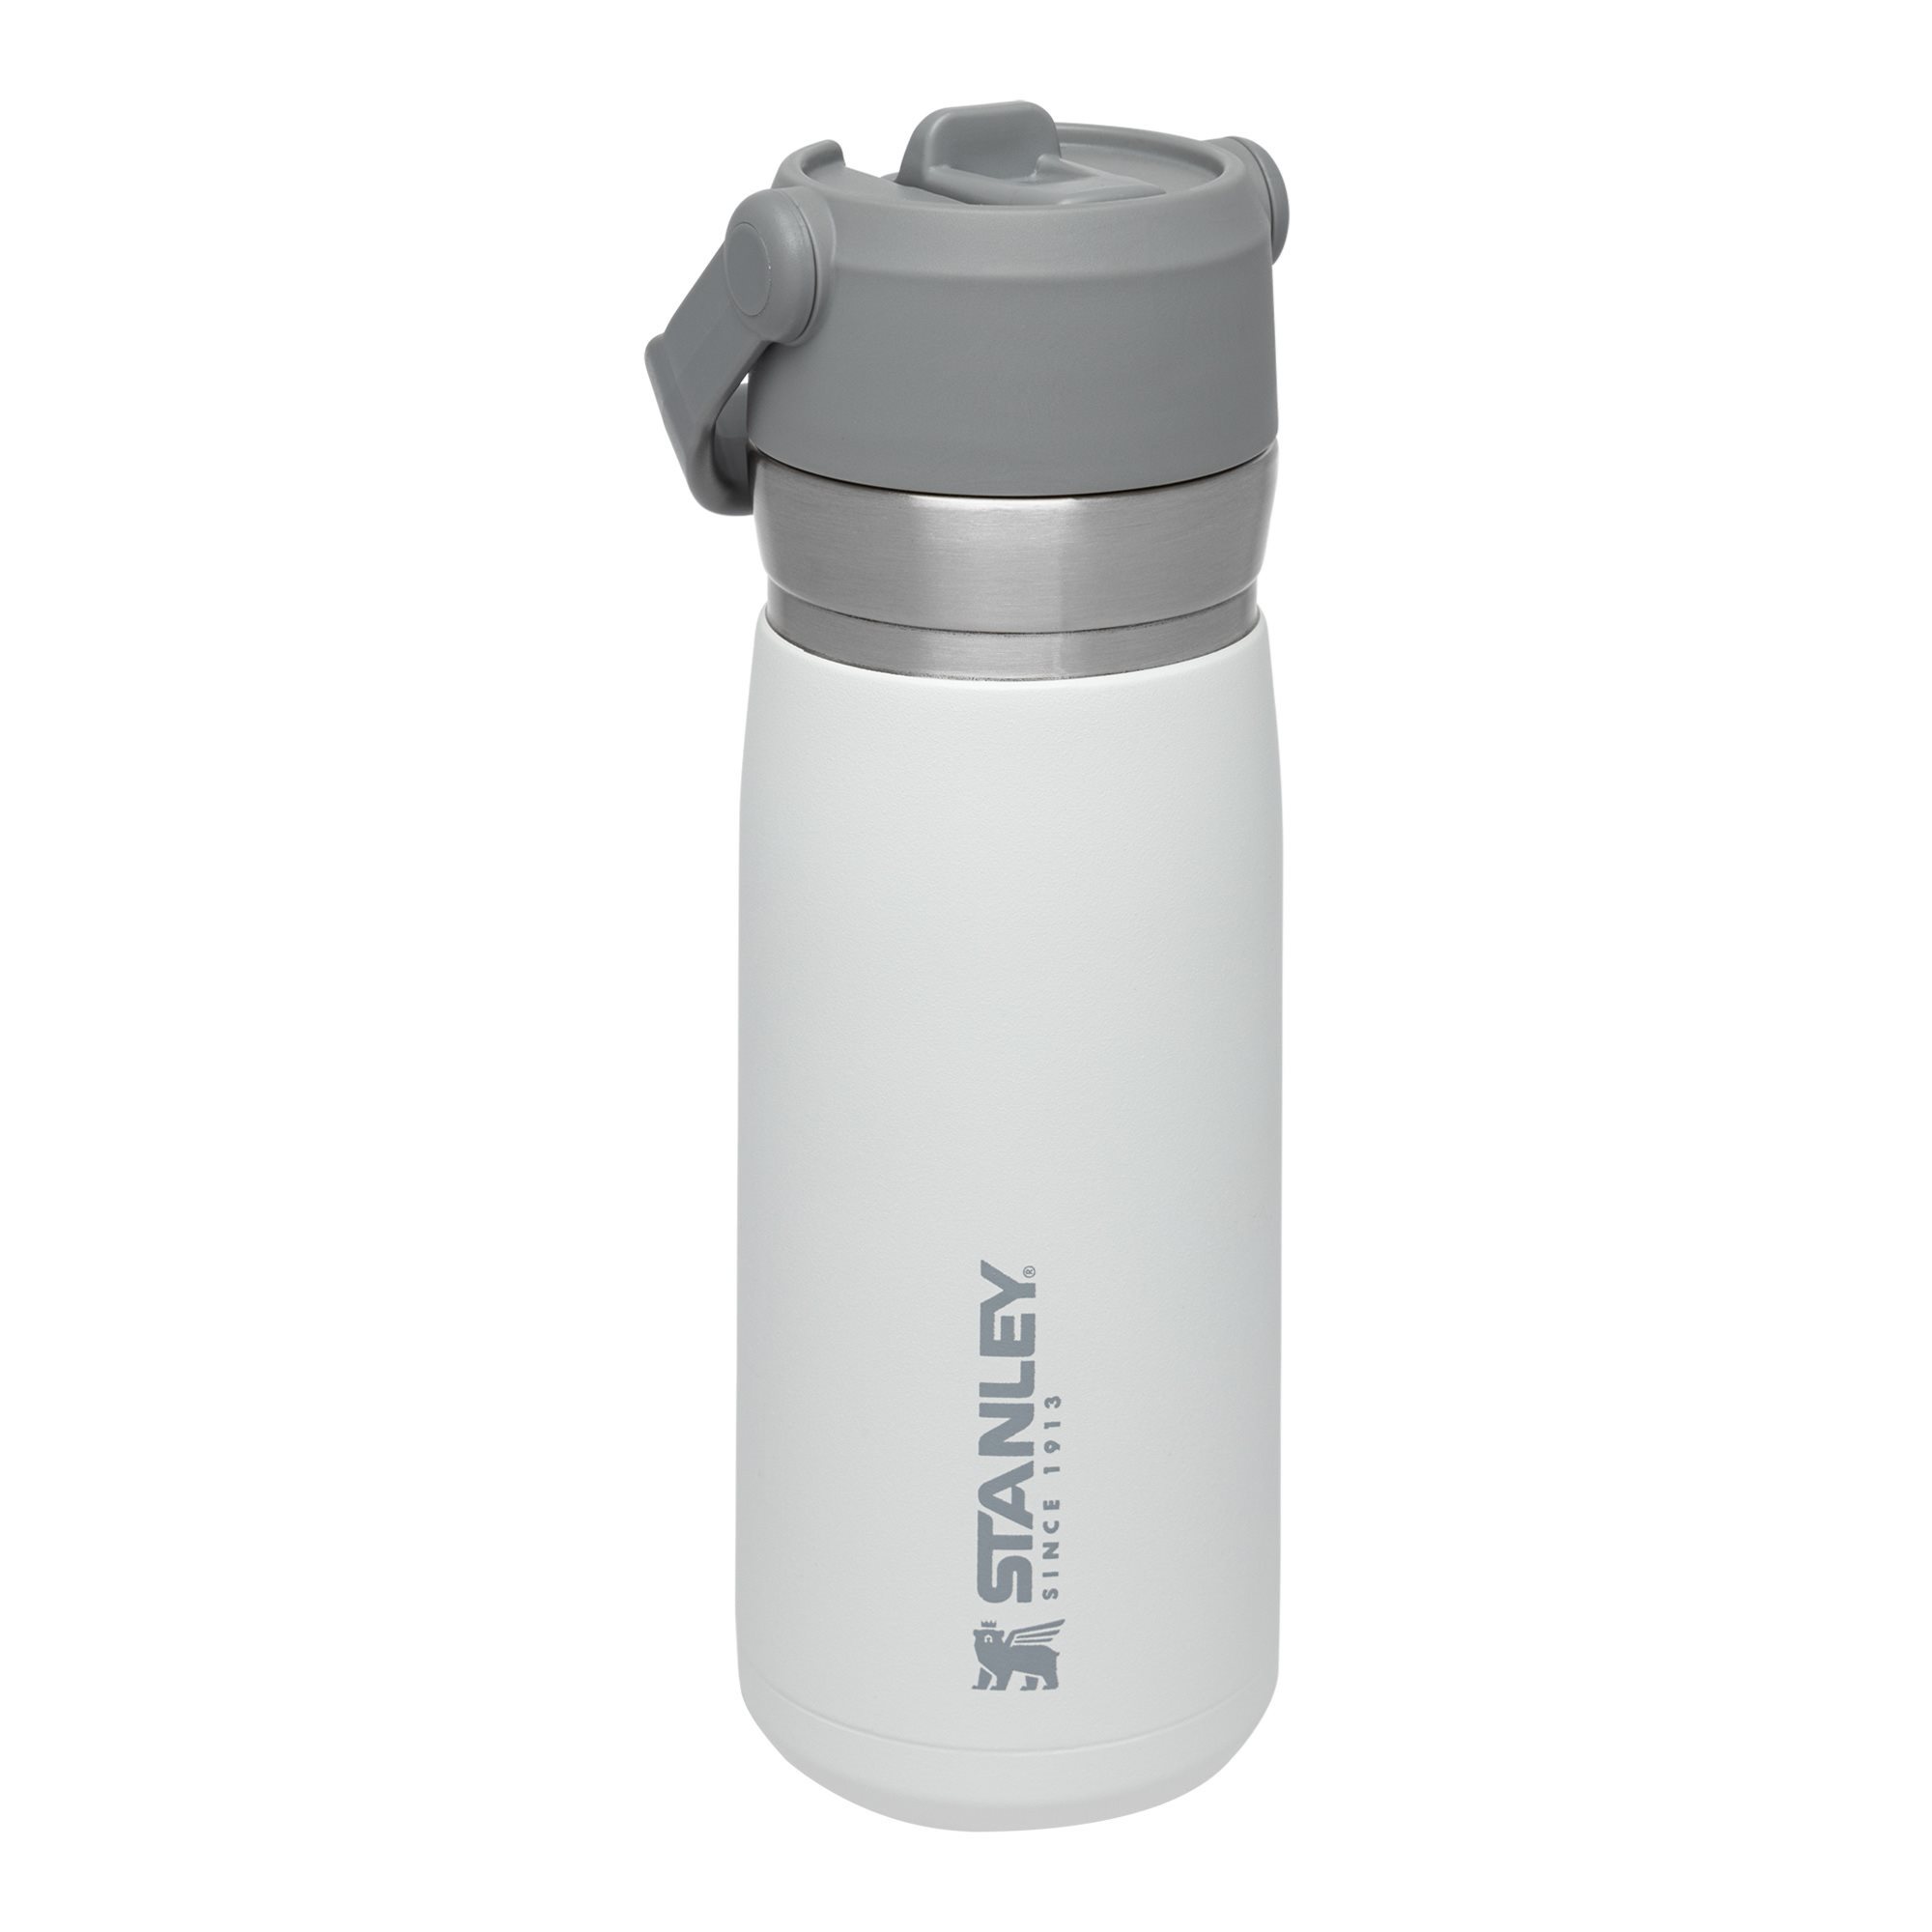 Water bottle, stainless steel, 650ml, Go Flip Straw, Polar